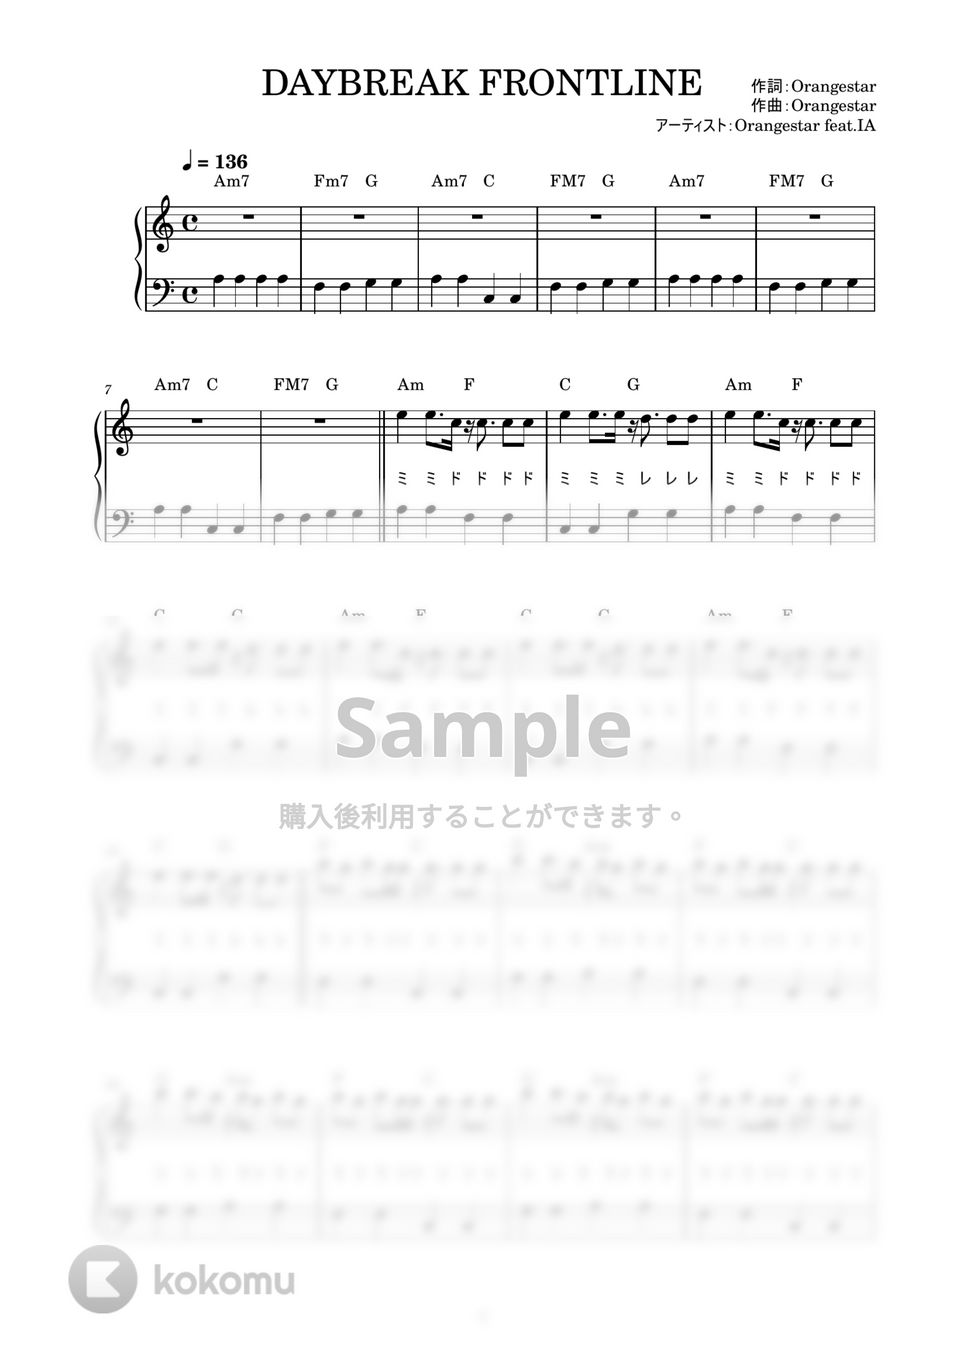 Orangestar feat.IA - DAYBREAK FRONTLINE (かんたん / 歌詞付き / ドレミ付き / 初心者) by piano.tokyo